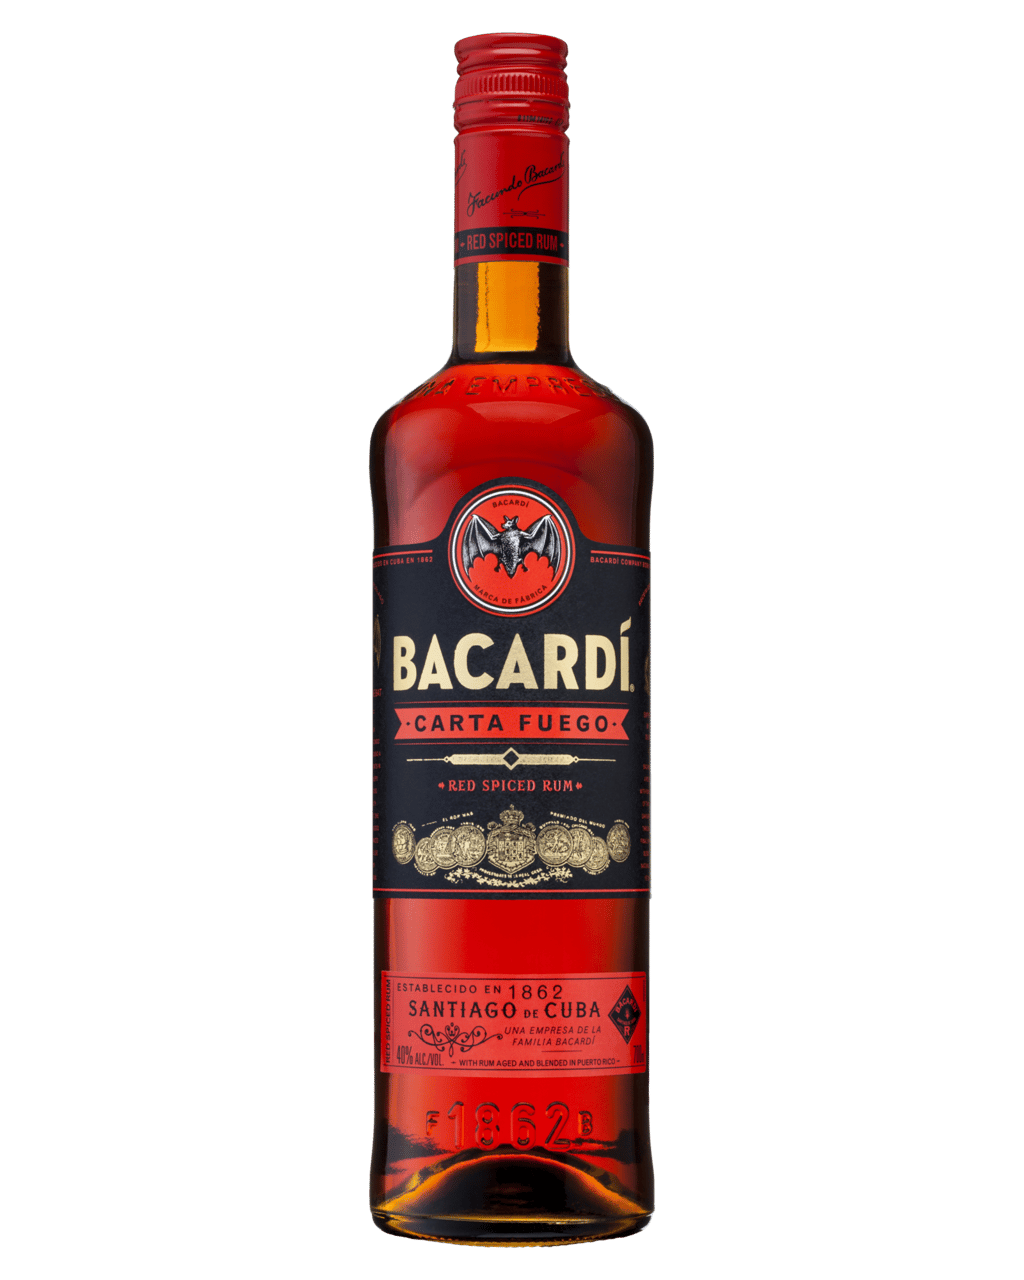 Buy Bacardi Carta Fuego Spiced Rum 700ml Online (Lowest Price Guarantee ...